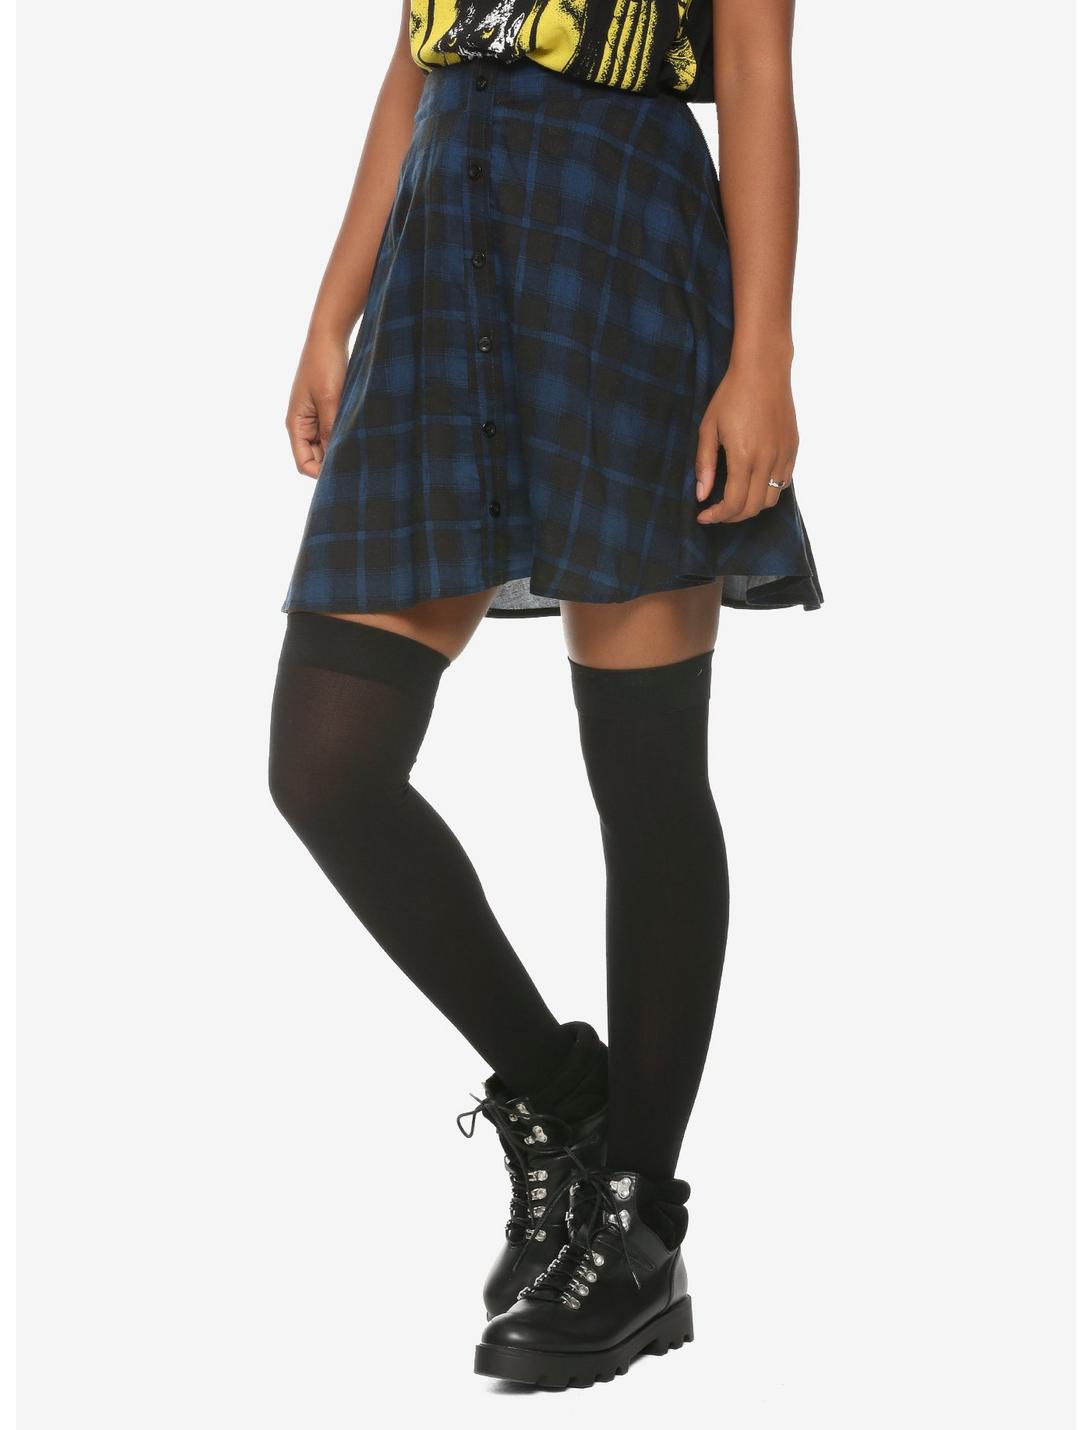 Blue & Black Plaid Skirt, TEAL, hi-res